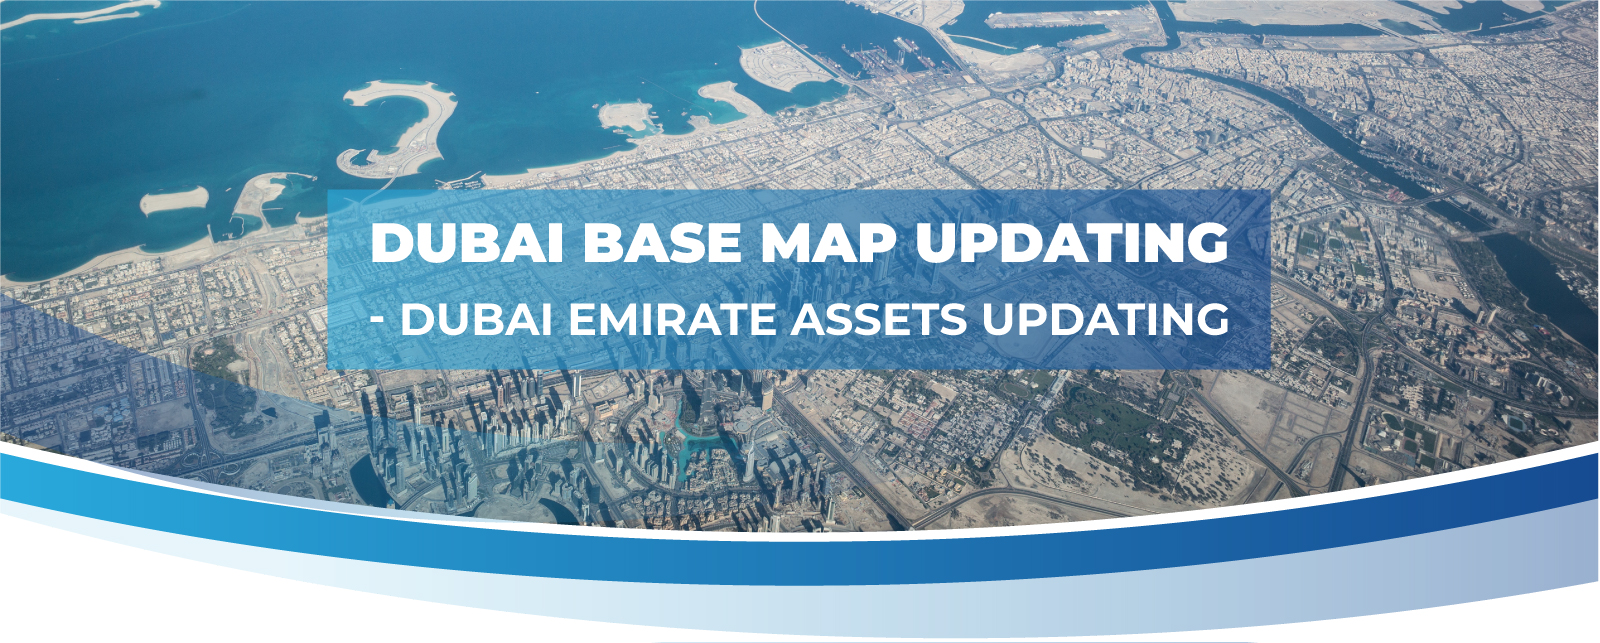 Dubai Base Map Updating - Dubai Emirate assets updating June 2022